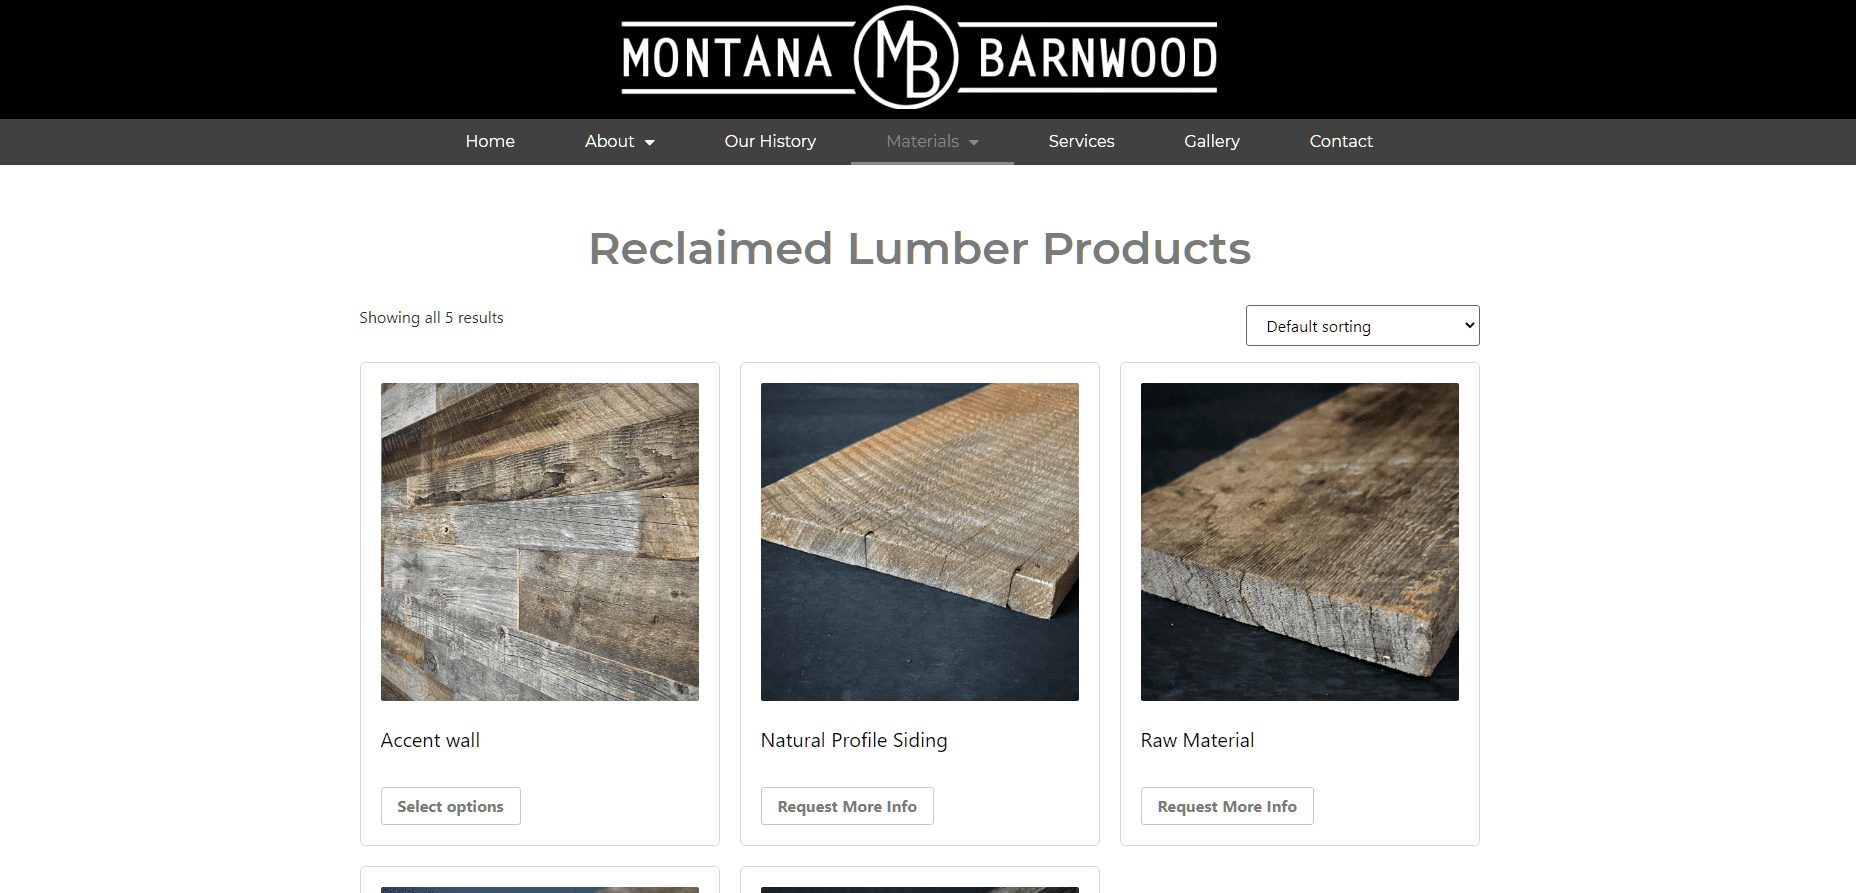 Montana Barnwood: Materials Page